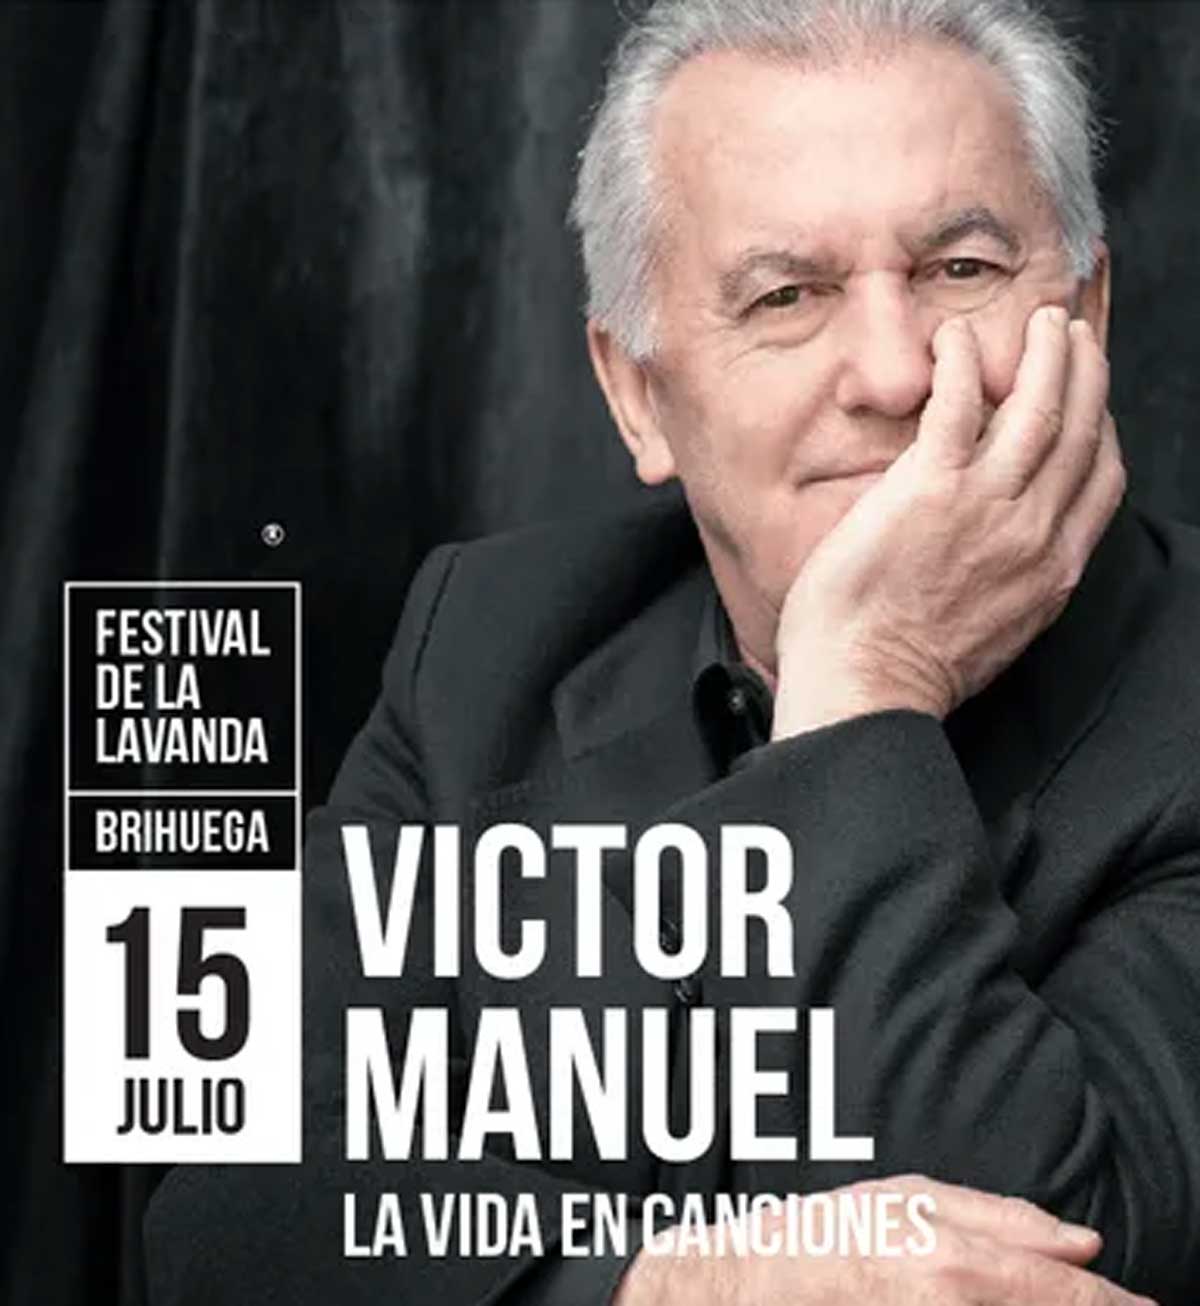 Cartel de Víctor Manuel Festival de la Lavanda.